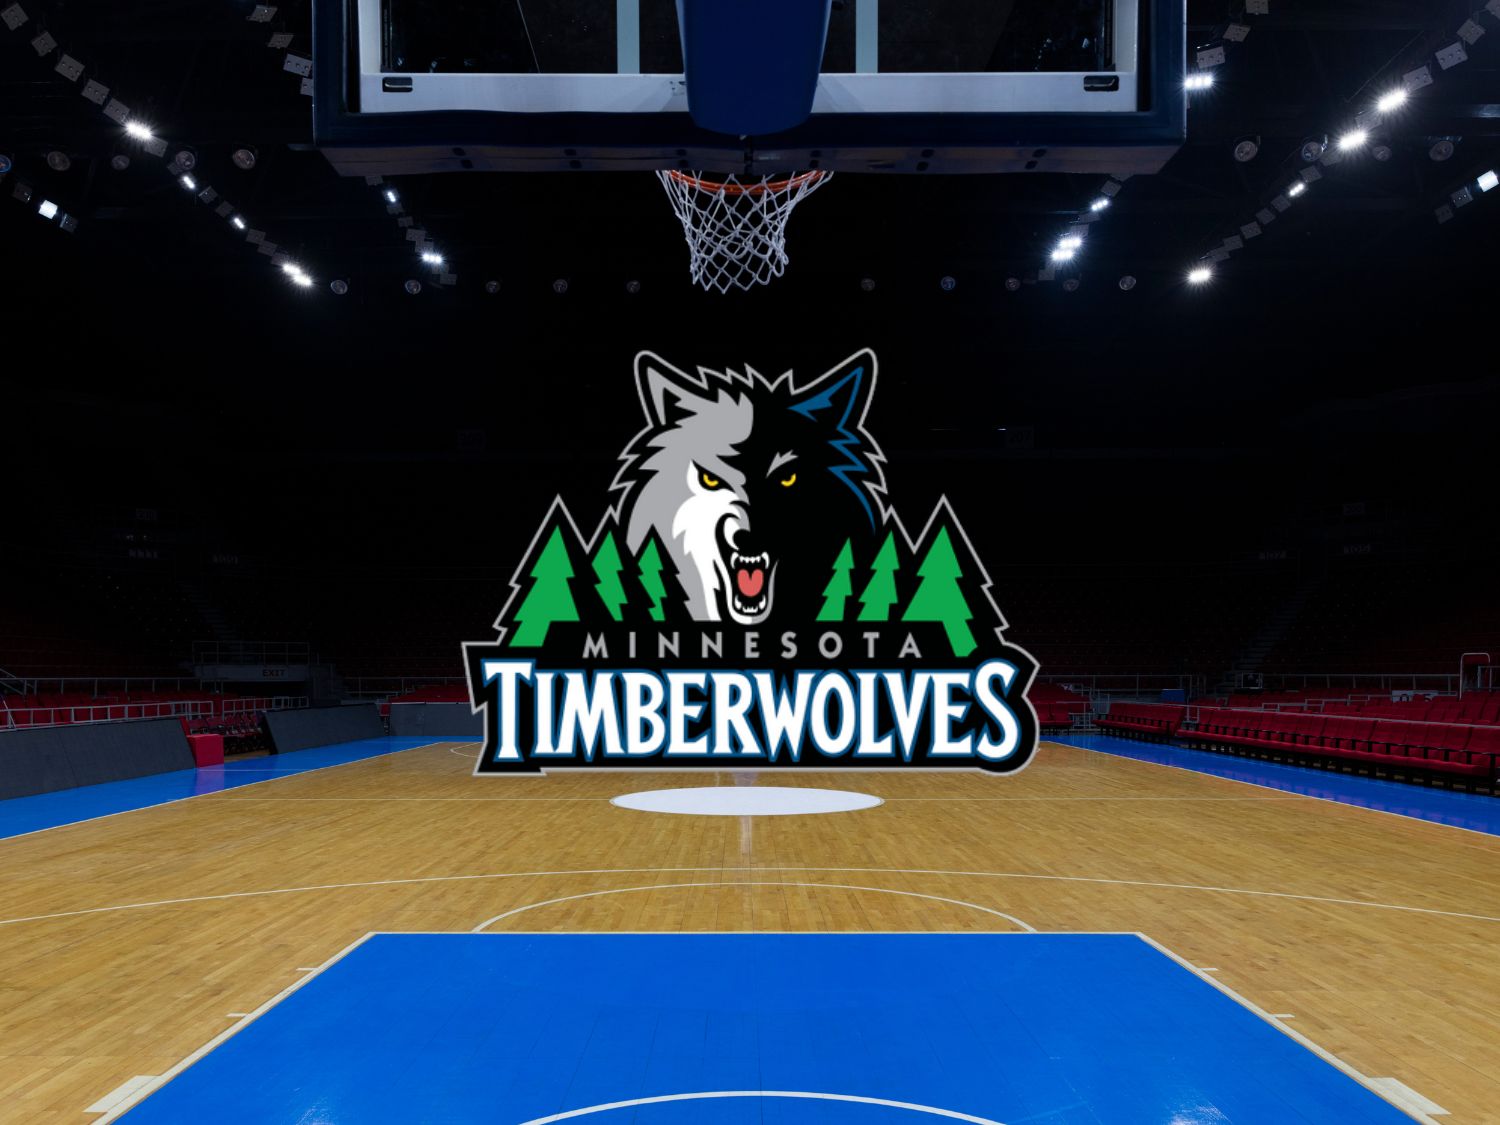 Minnesota Timberwolves Tickets and Seats